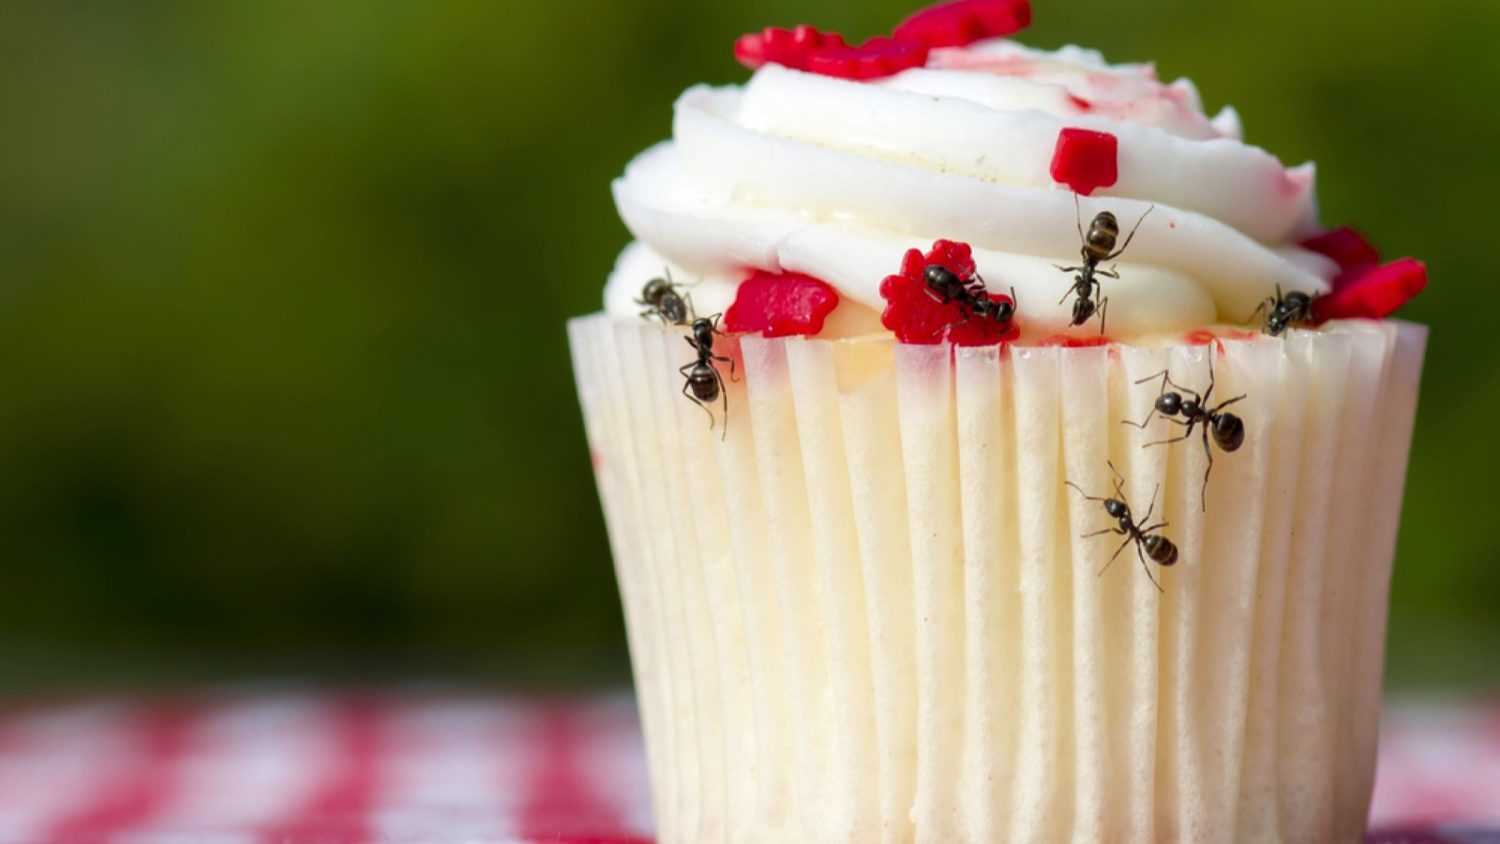 Ants on cake